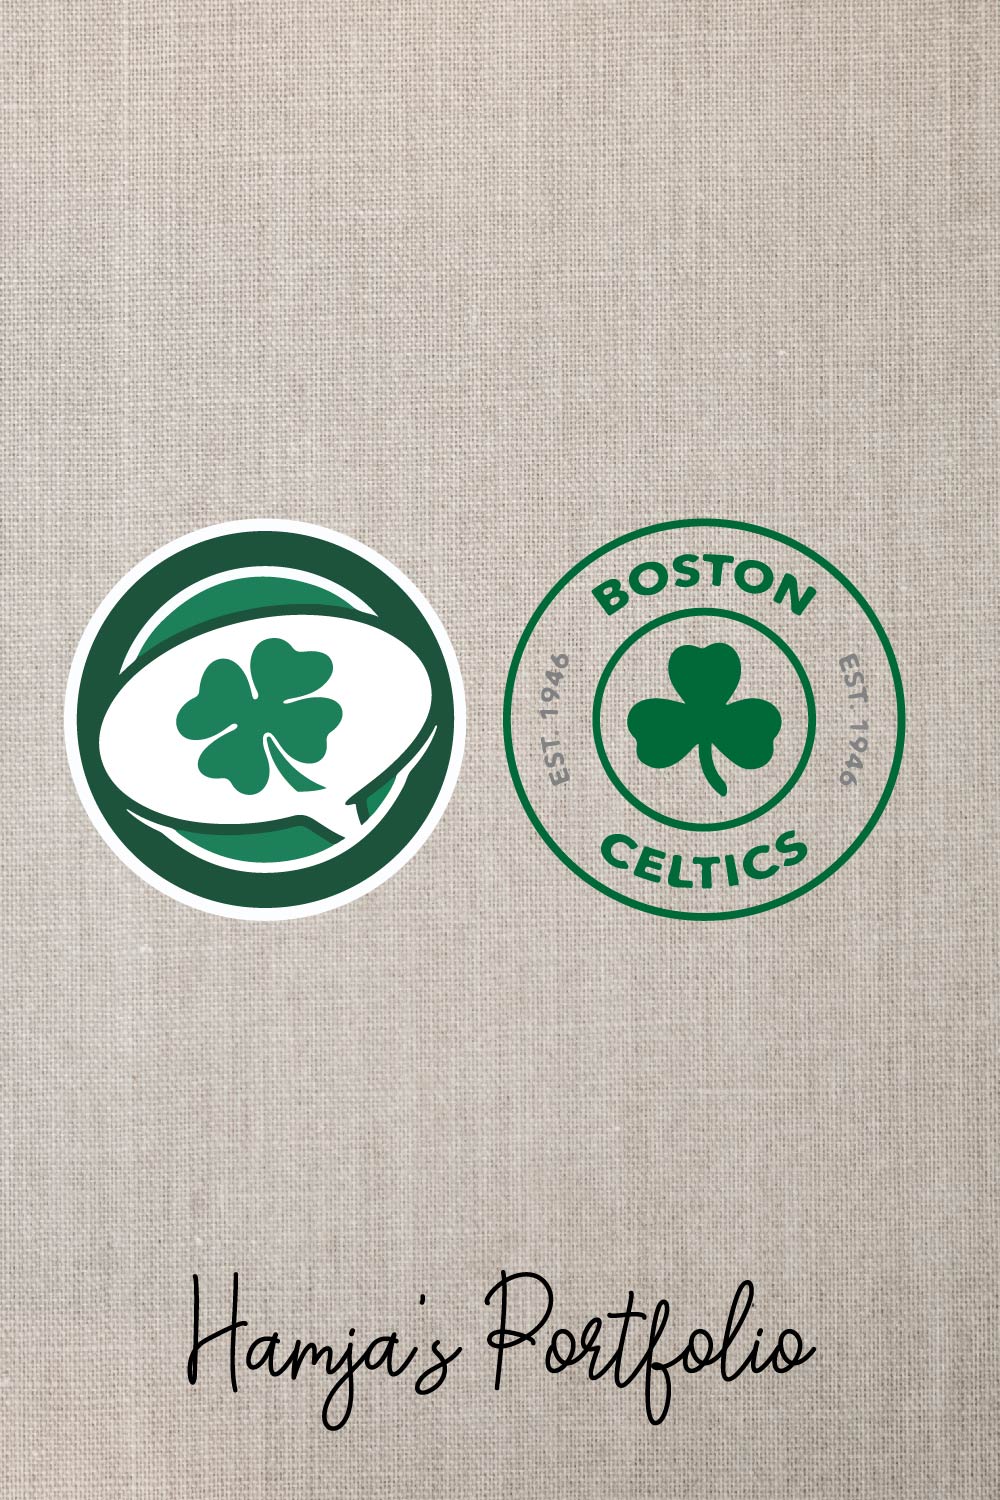 Bostonceltic Logo Vector Set pinterest preview image.